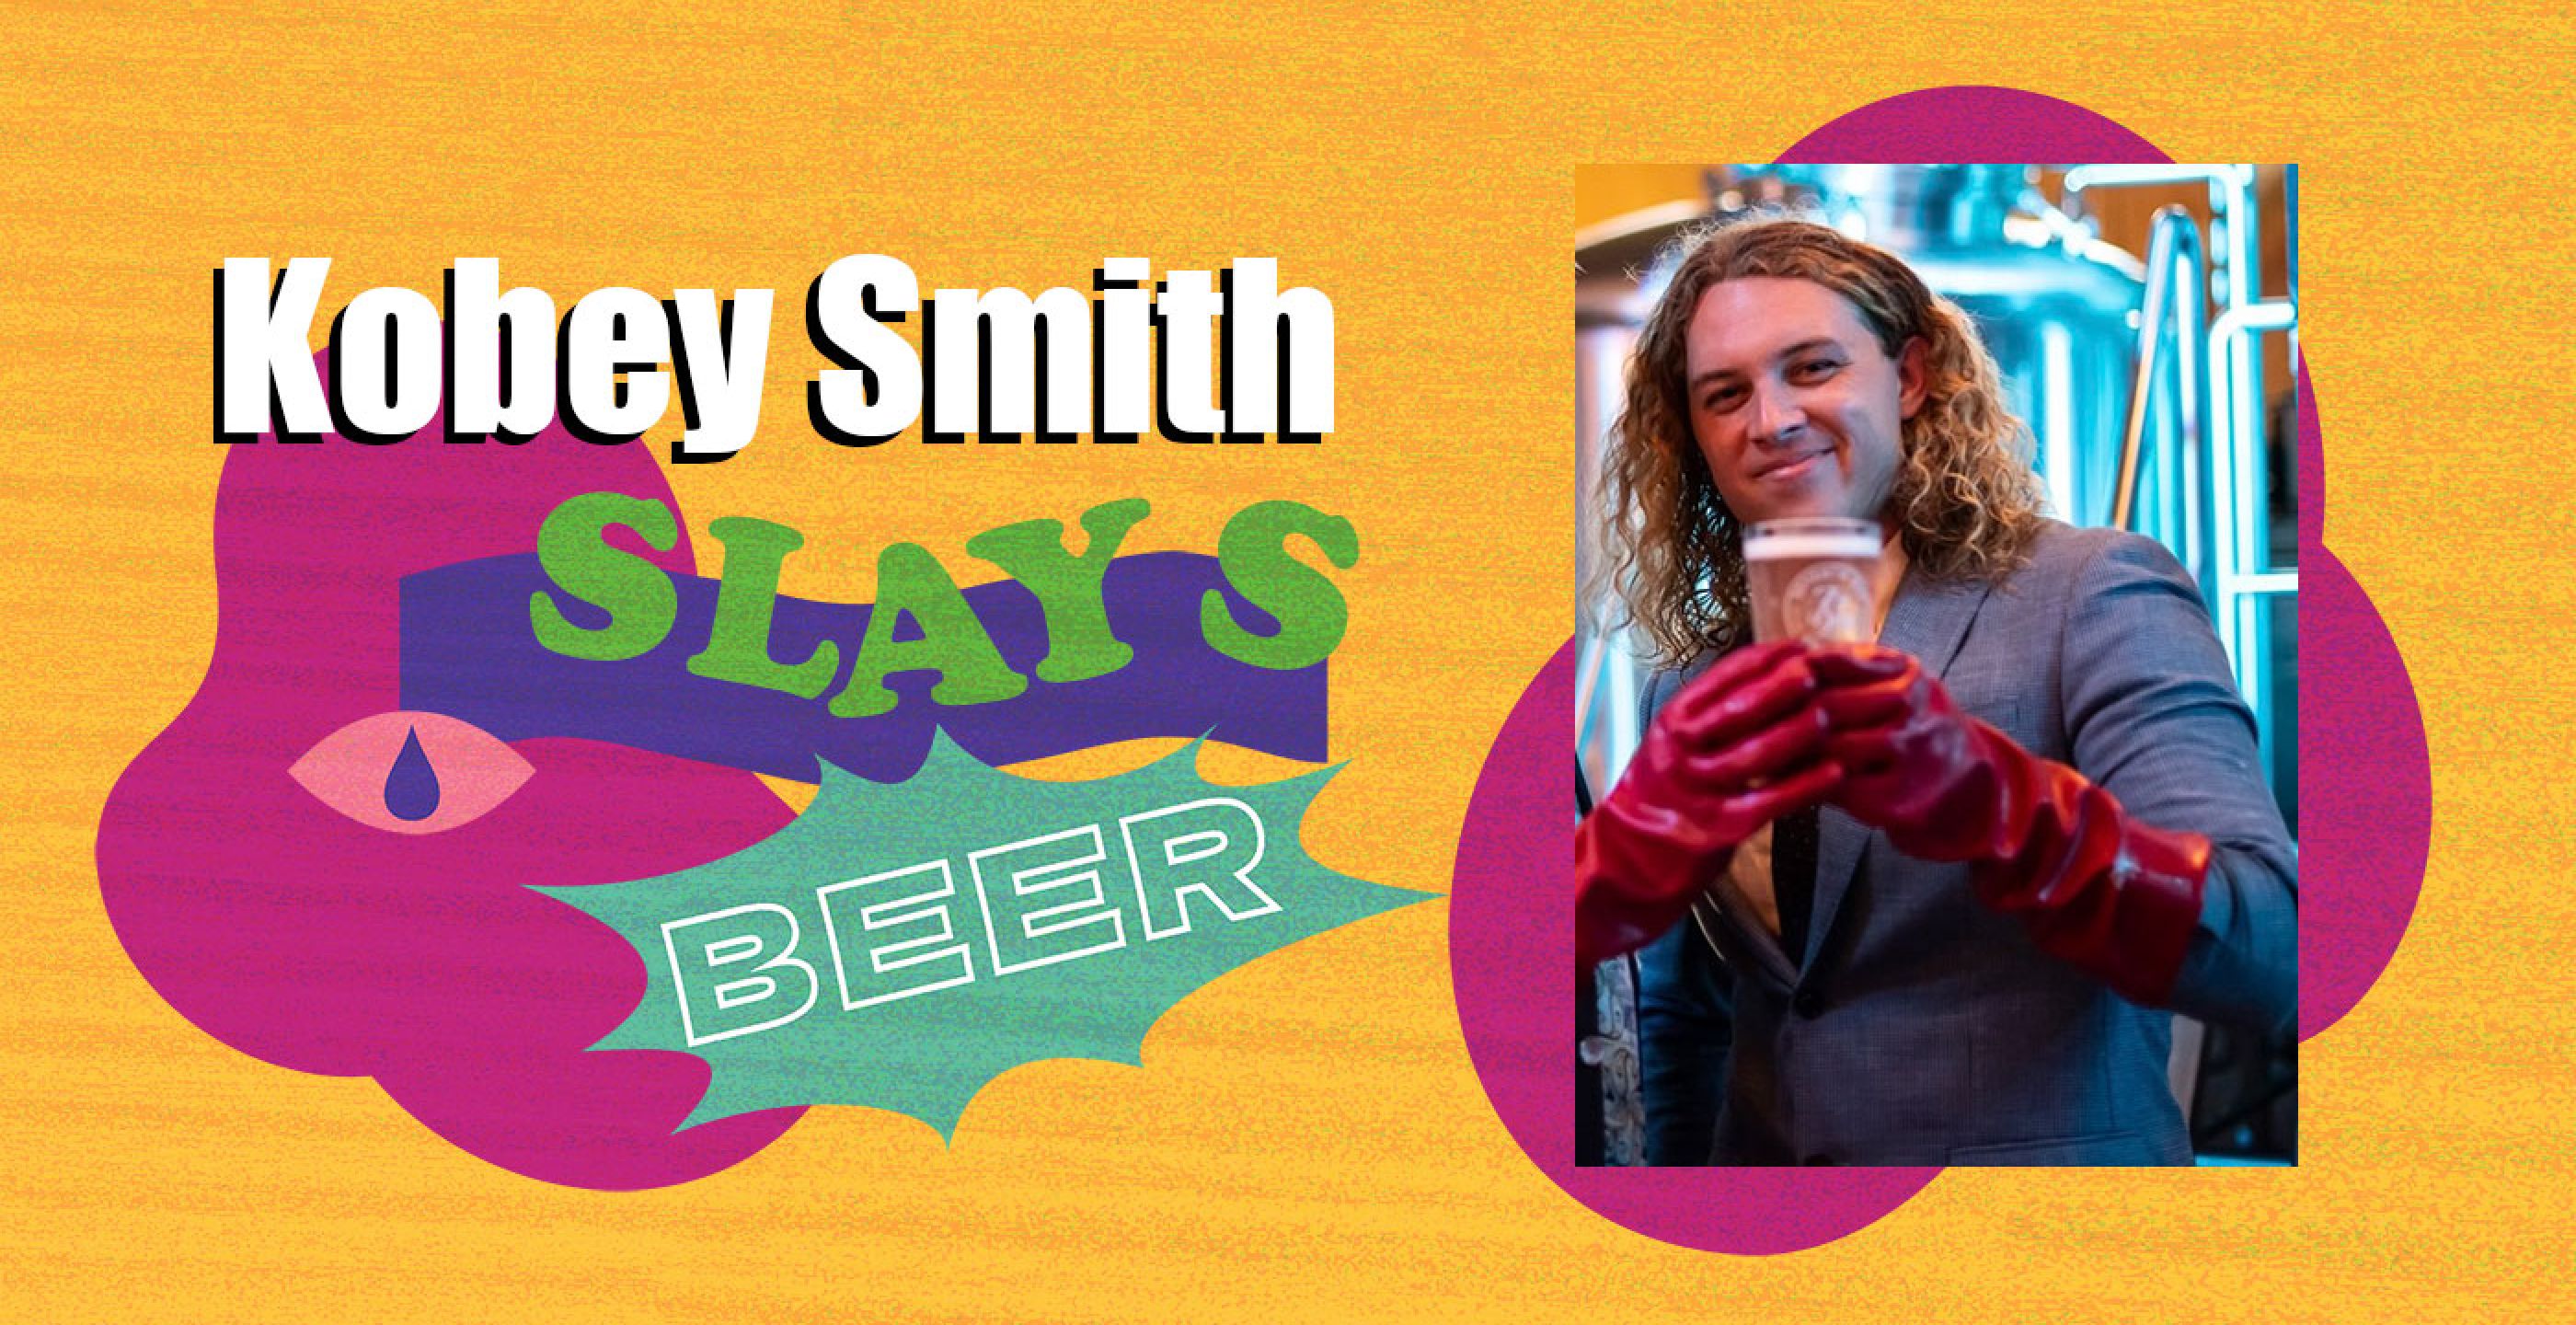 Kobey Smith Slays Beer